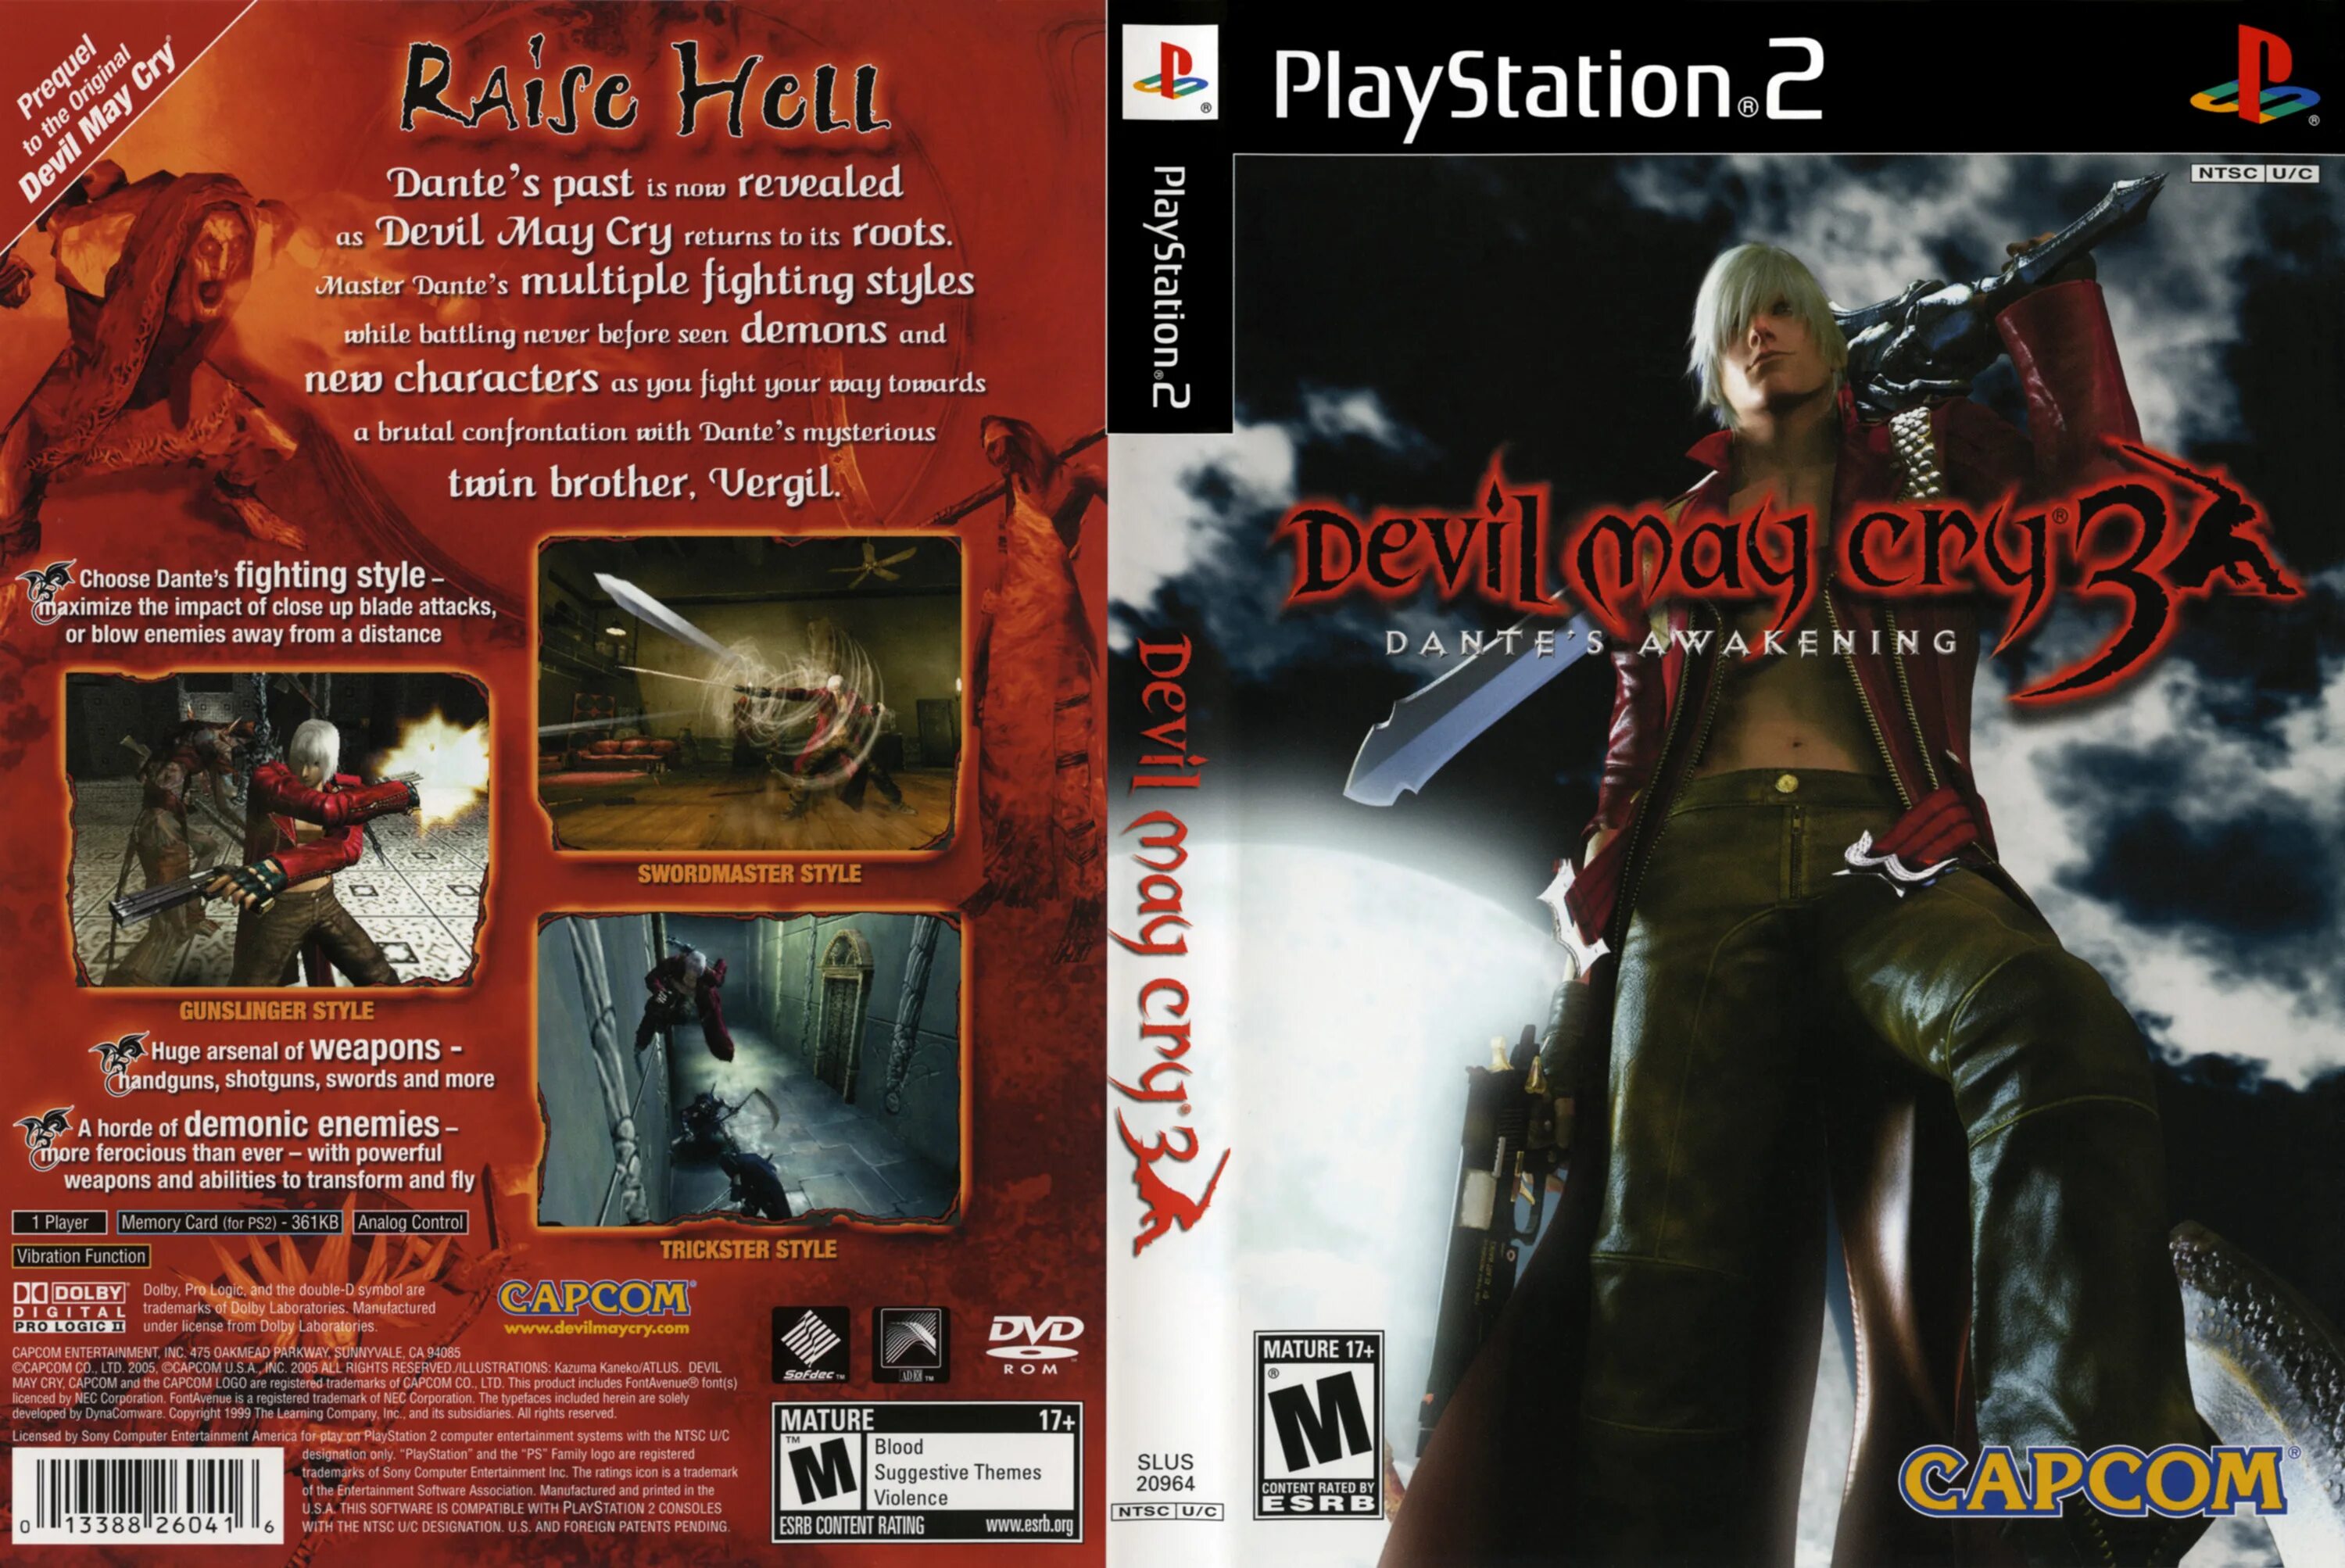 Devil May Cry 3 ps2 обложка. Devil May Cry 3 ps2 диск. Devil May Cry 3 Special Edition ps2. Обложка Devil my Cry PS 2. Dmc ps2